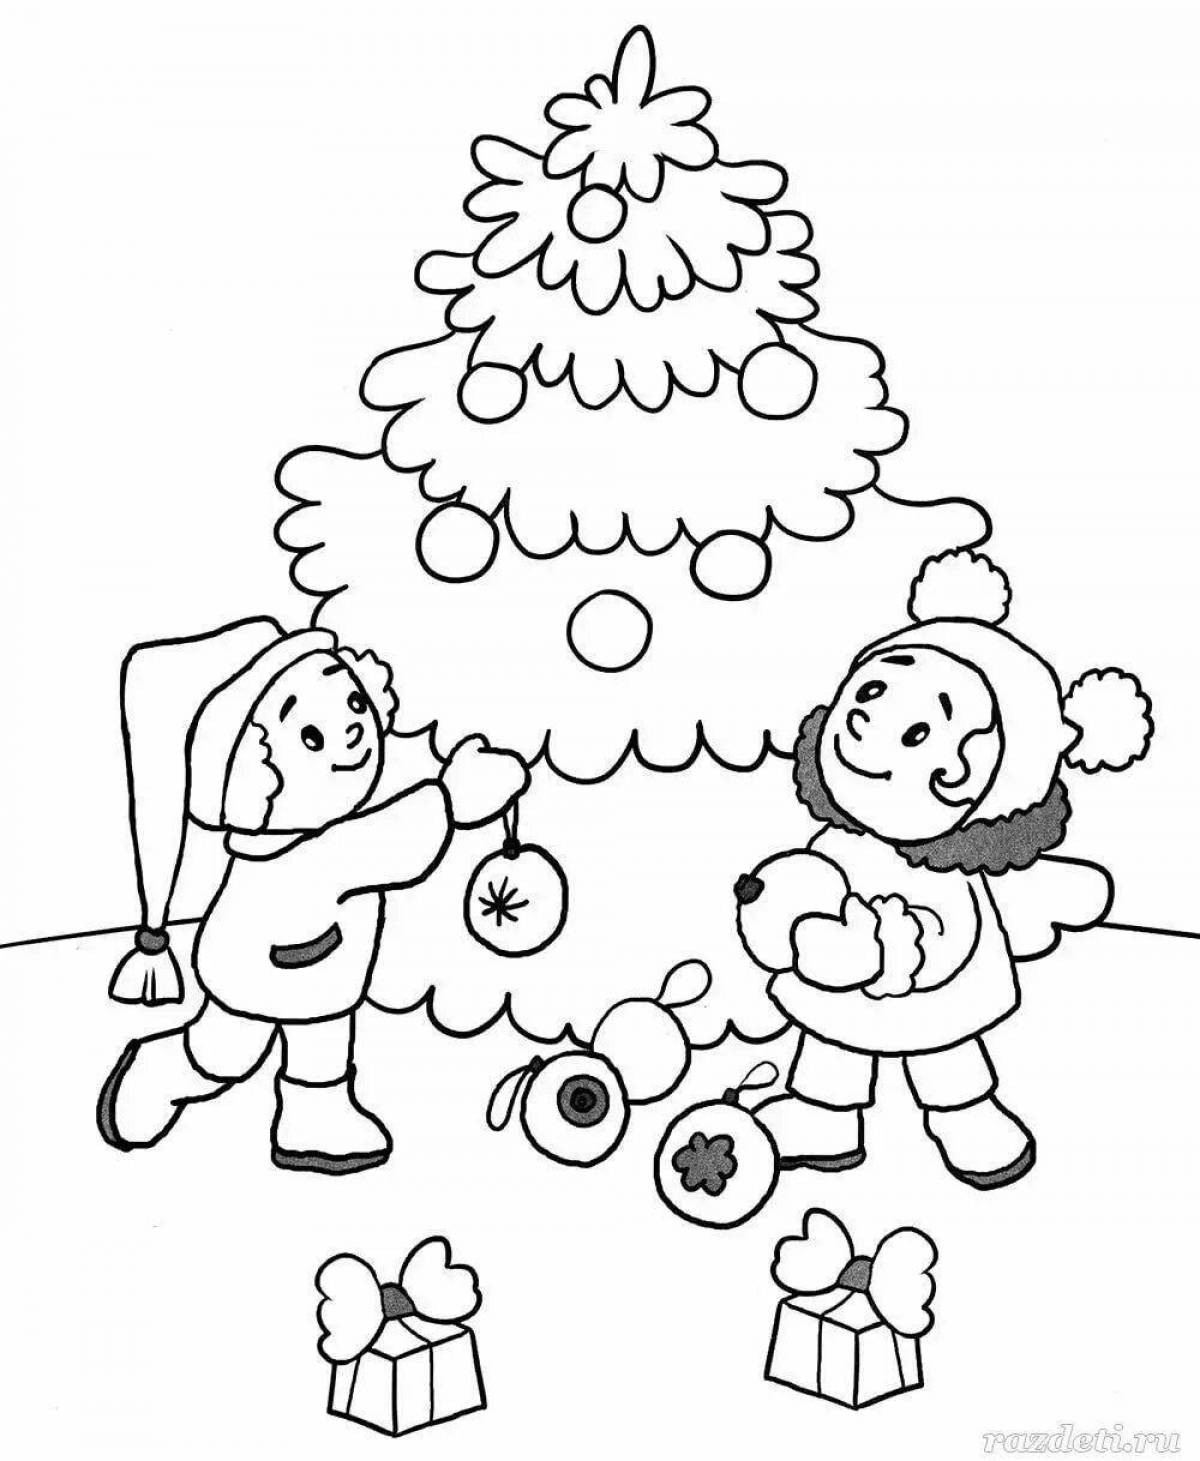 Adorable children's winter coloring book